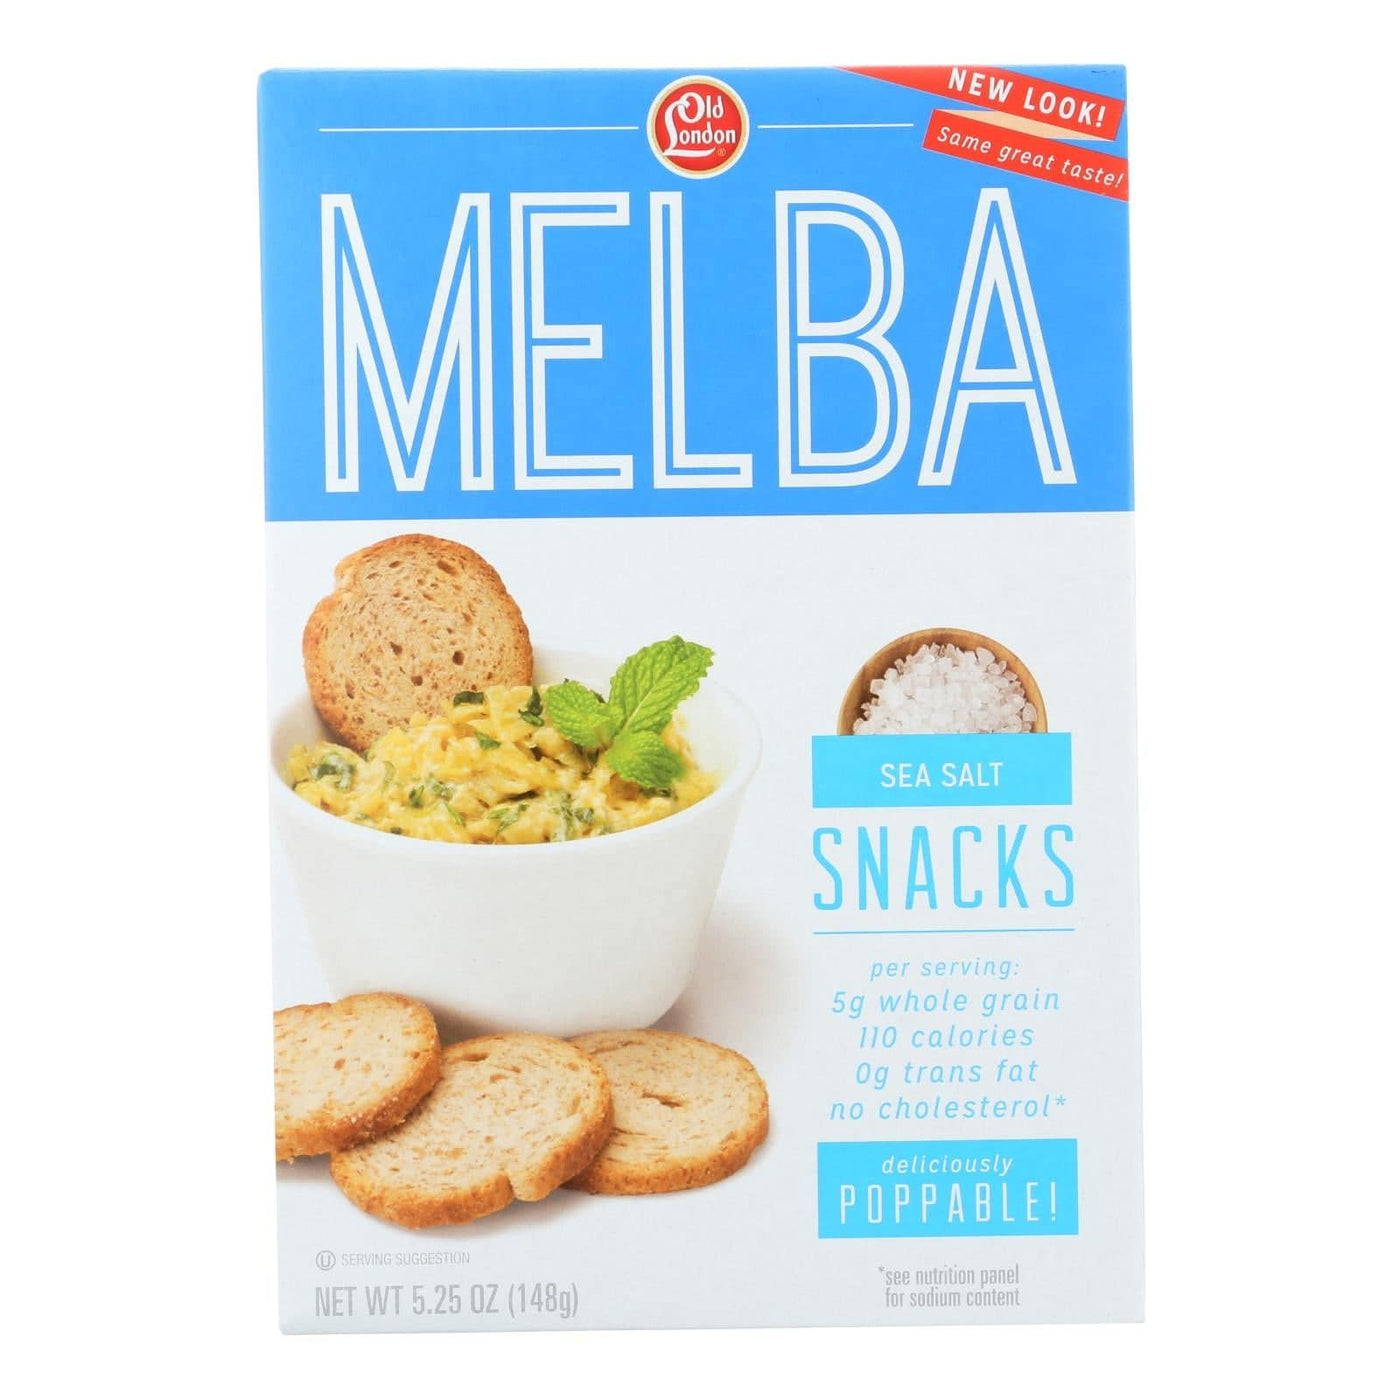 Buy Old London - Melba Snacks - Sea Salt - Case Of 12 - 5.25 Oz.  at OnlyNaturals.us